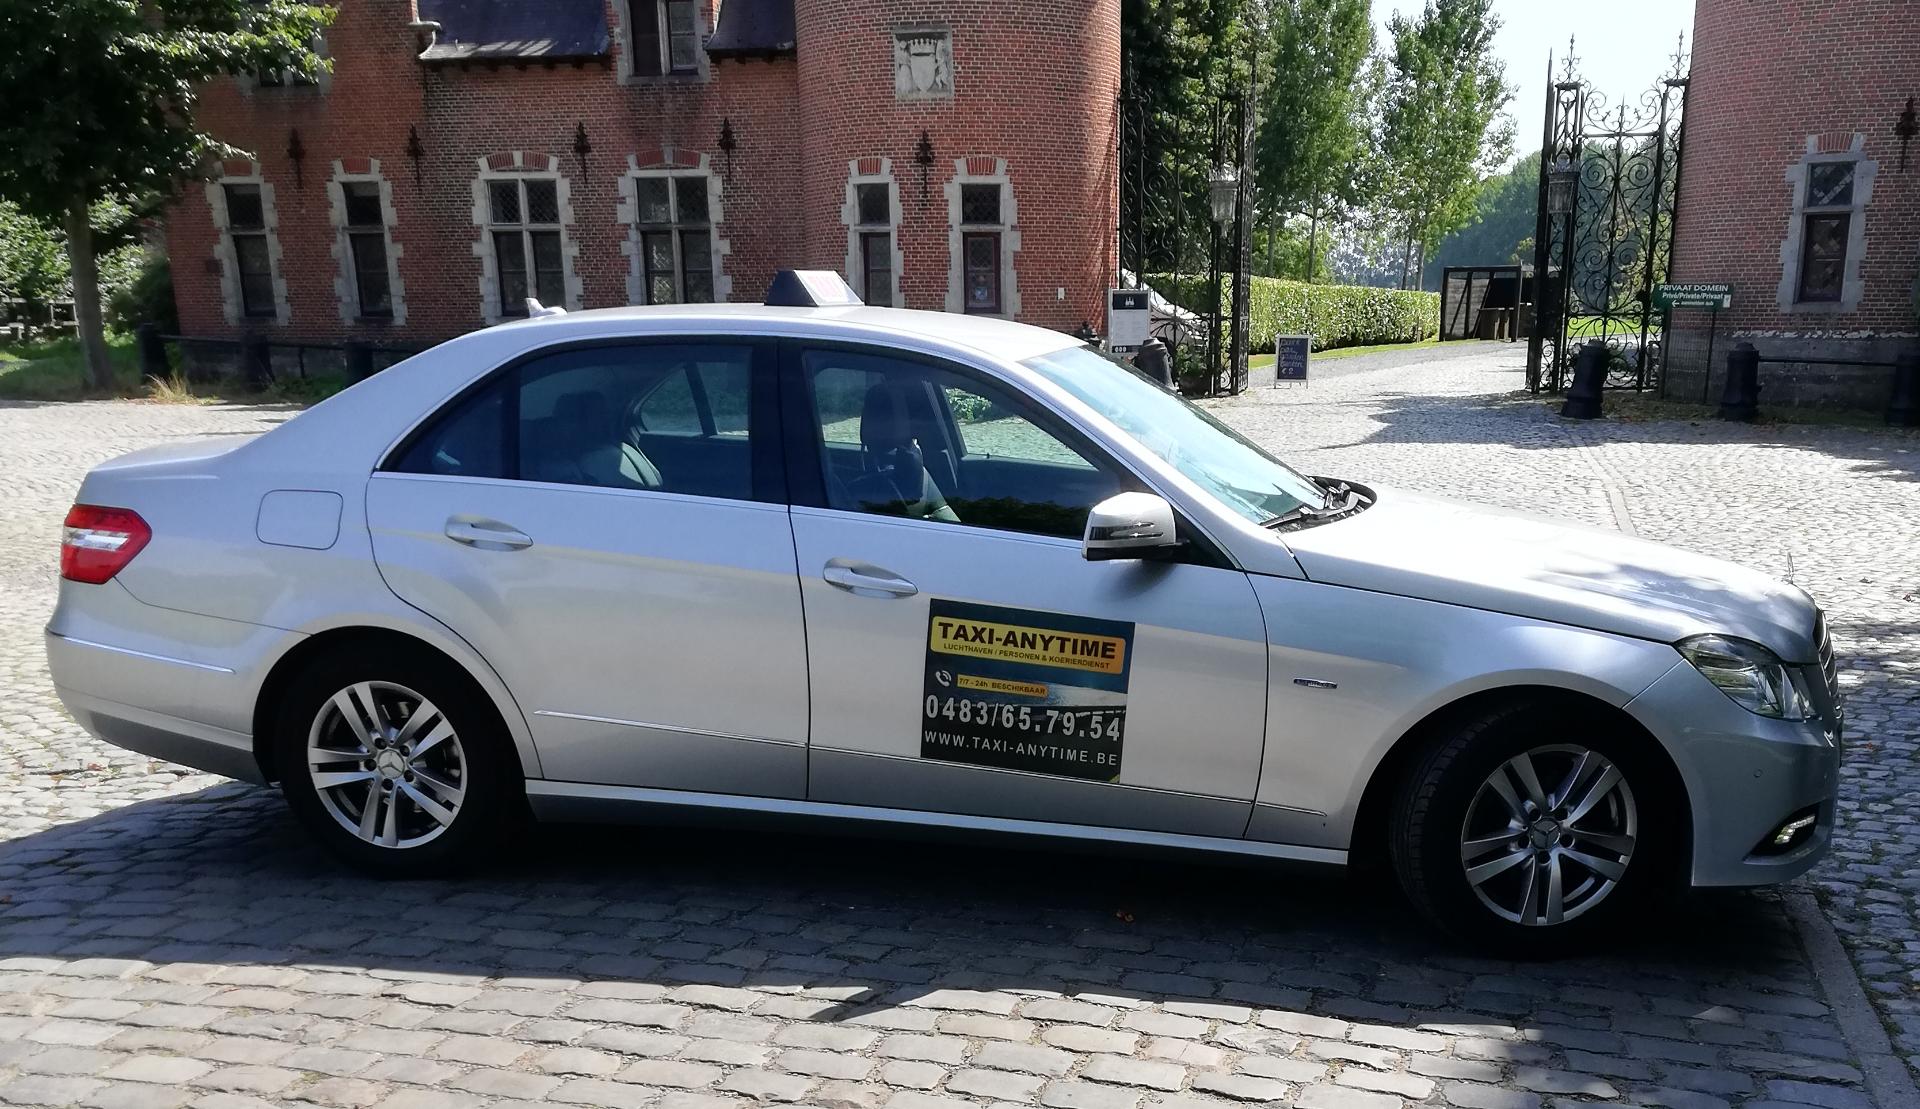 taxibedrijven met luchthavenvervoer Oostkamp Taxi Anytime